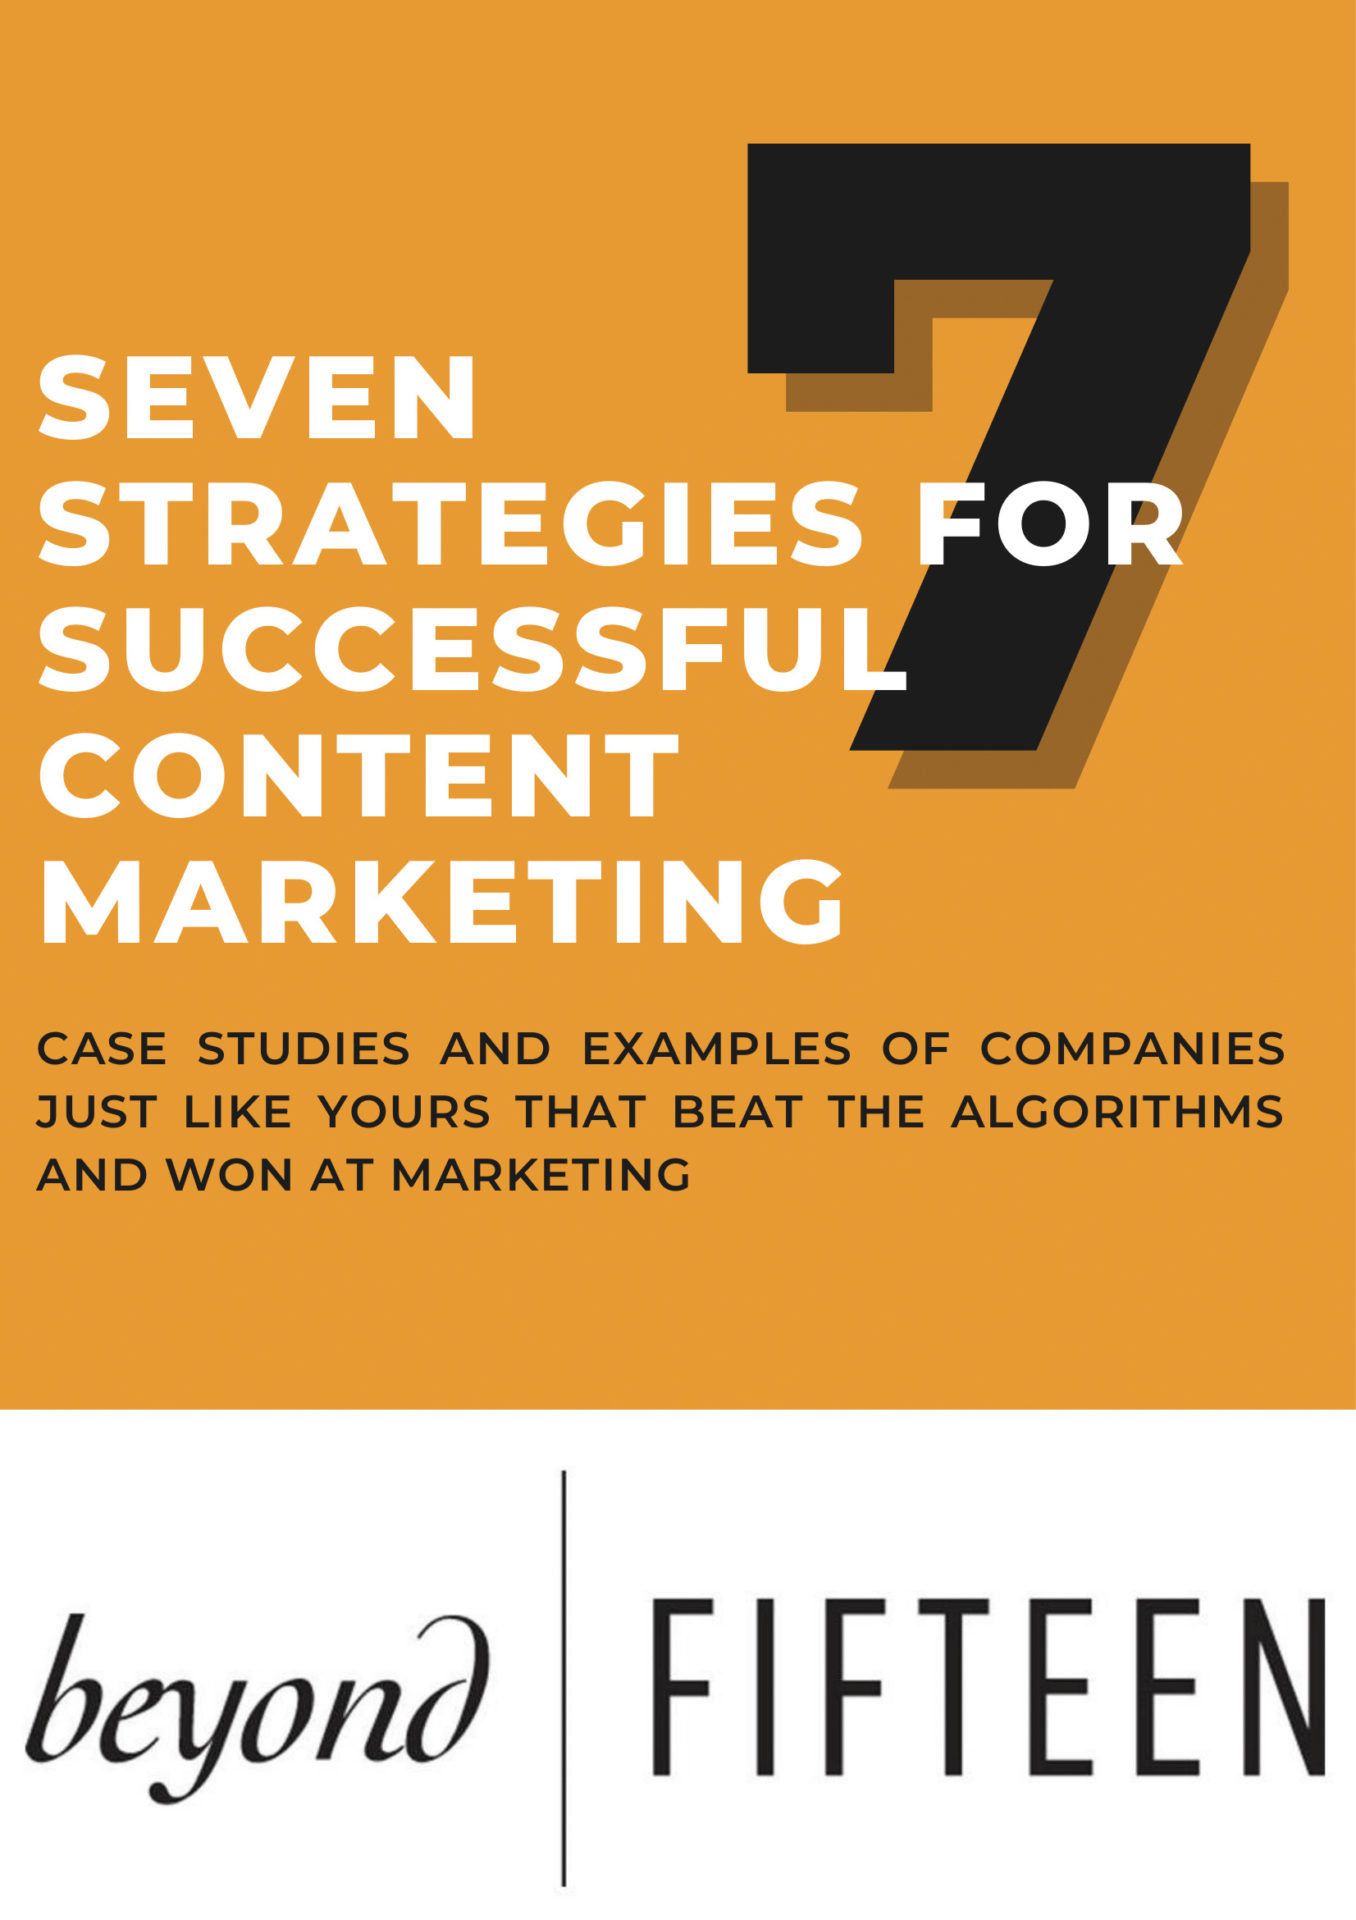 Seven Strategies for Successful Content Marketing - Beyond Fifteen e-book-01